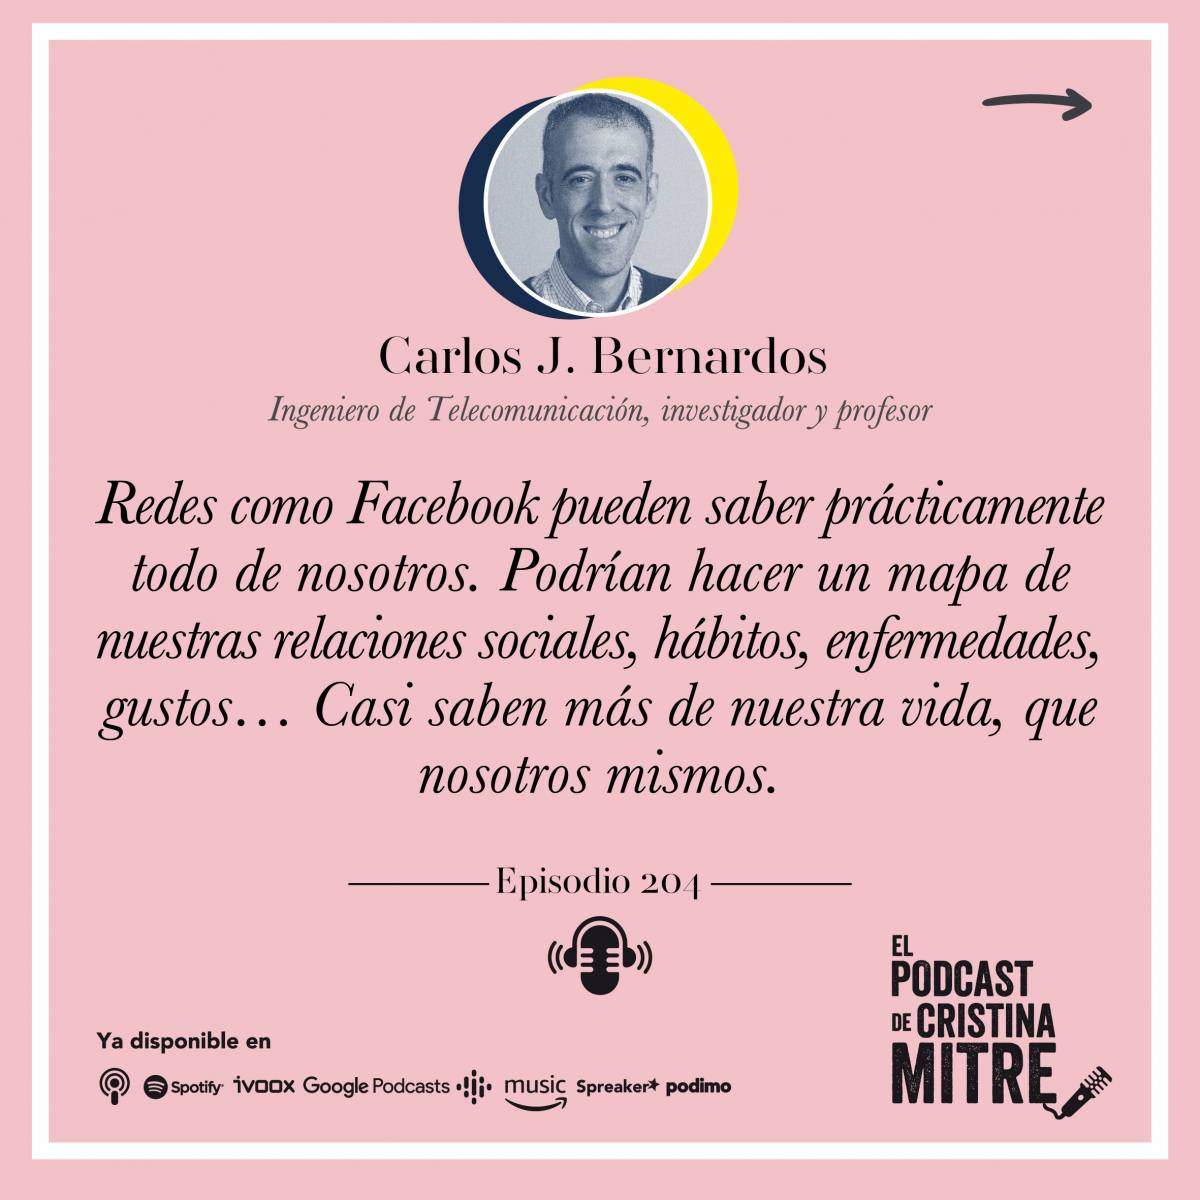 El podcast de Cristina Mitre Carlos J. Bernardos Internet proteger datos